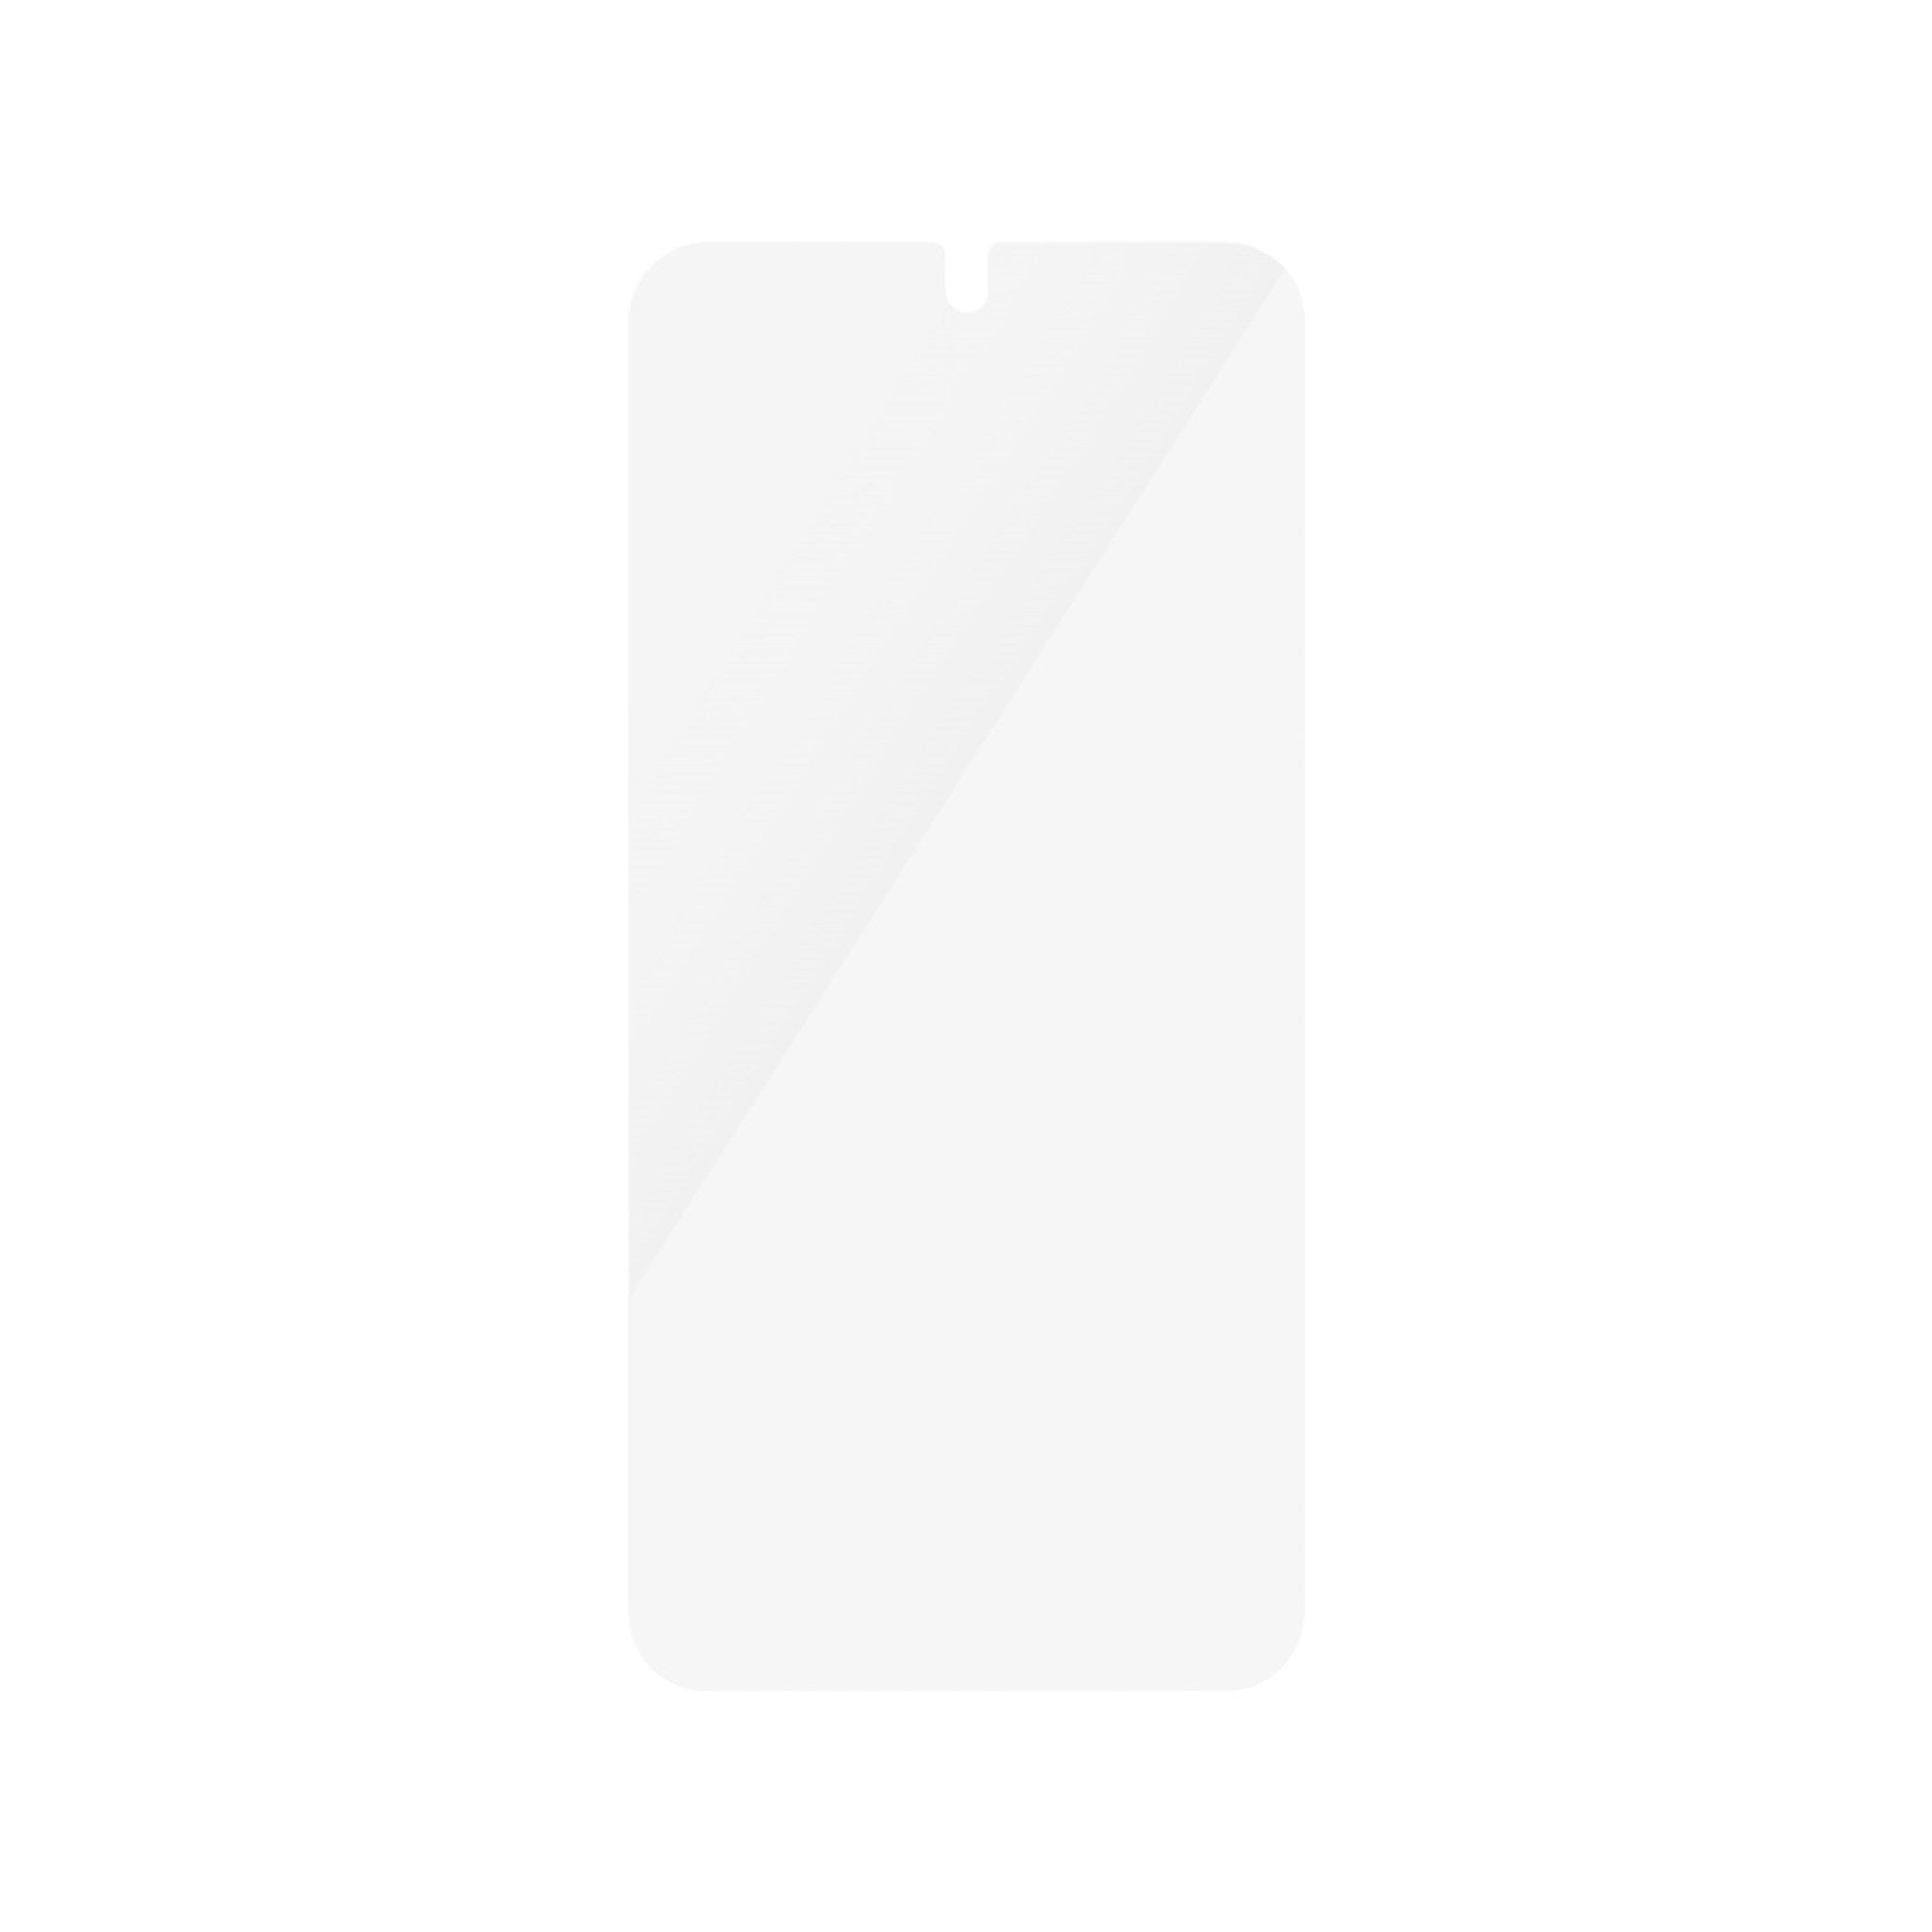 PANZERGLASS Ultra-wide Fit A54 Galaxy Samsung Displayschutz(für 5G)